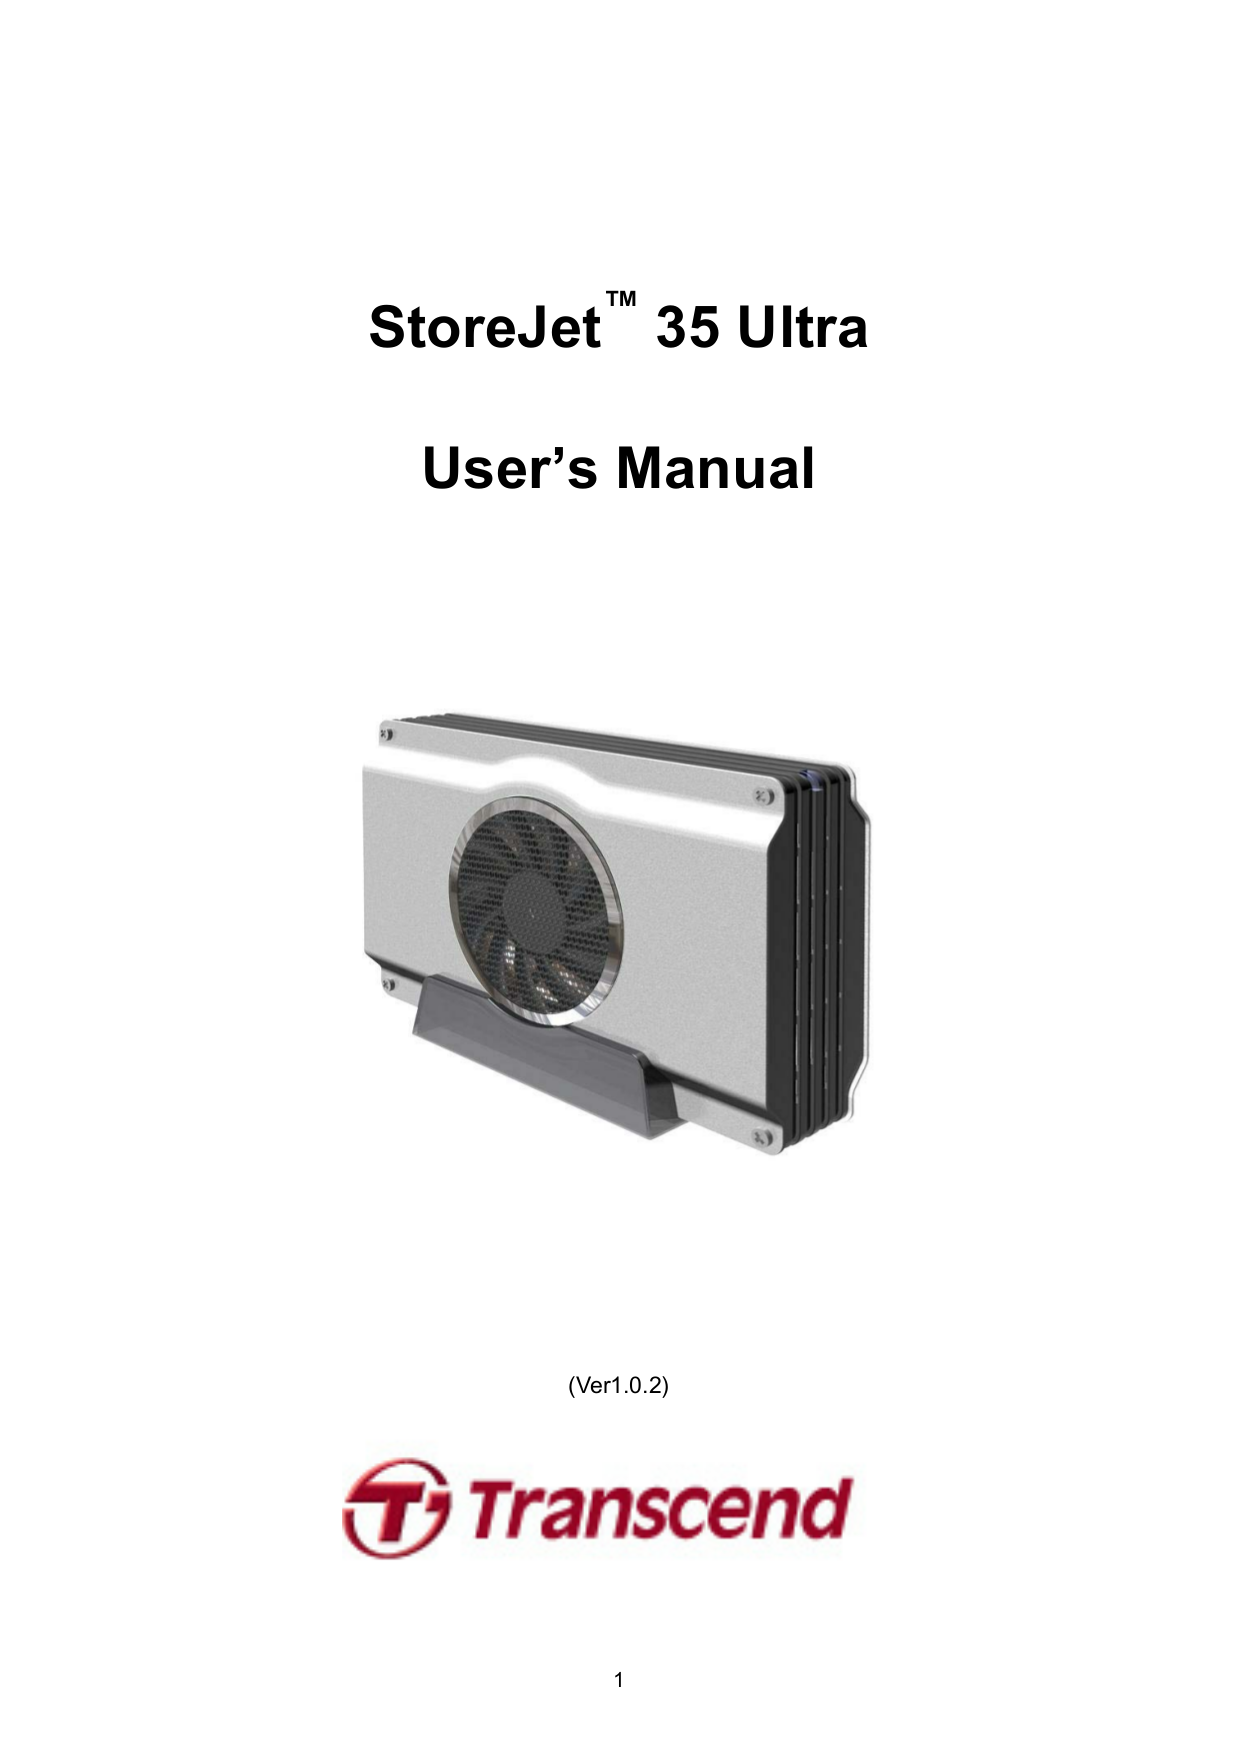 pdf for Transcend Storage StoreJet 35 Ultra 500GB manual